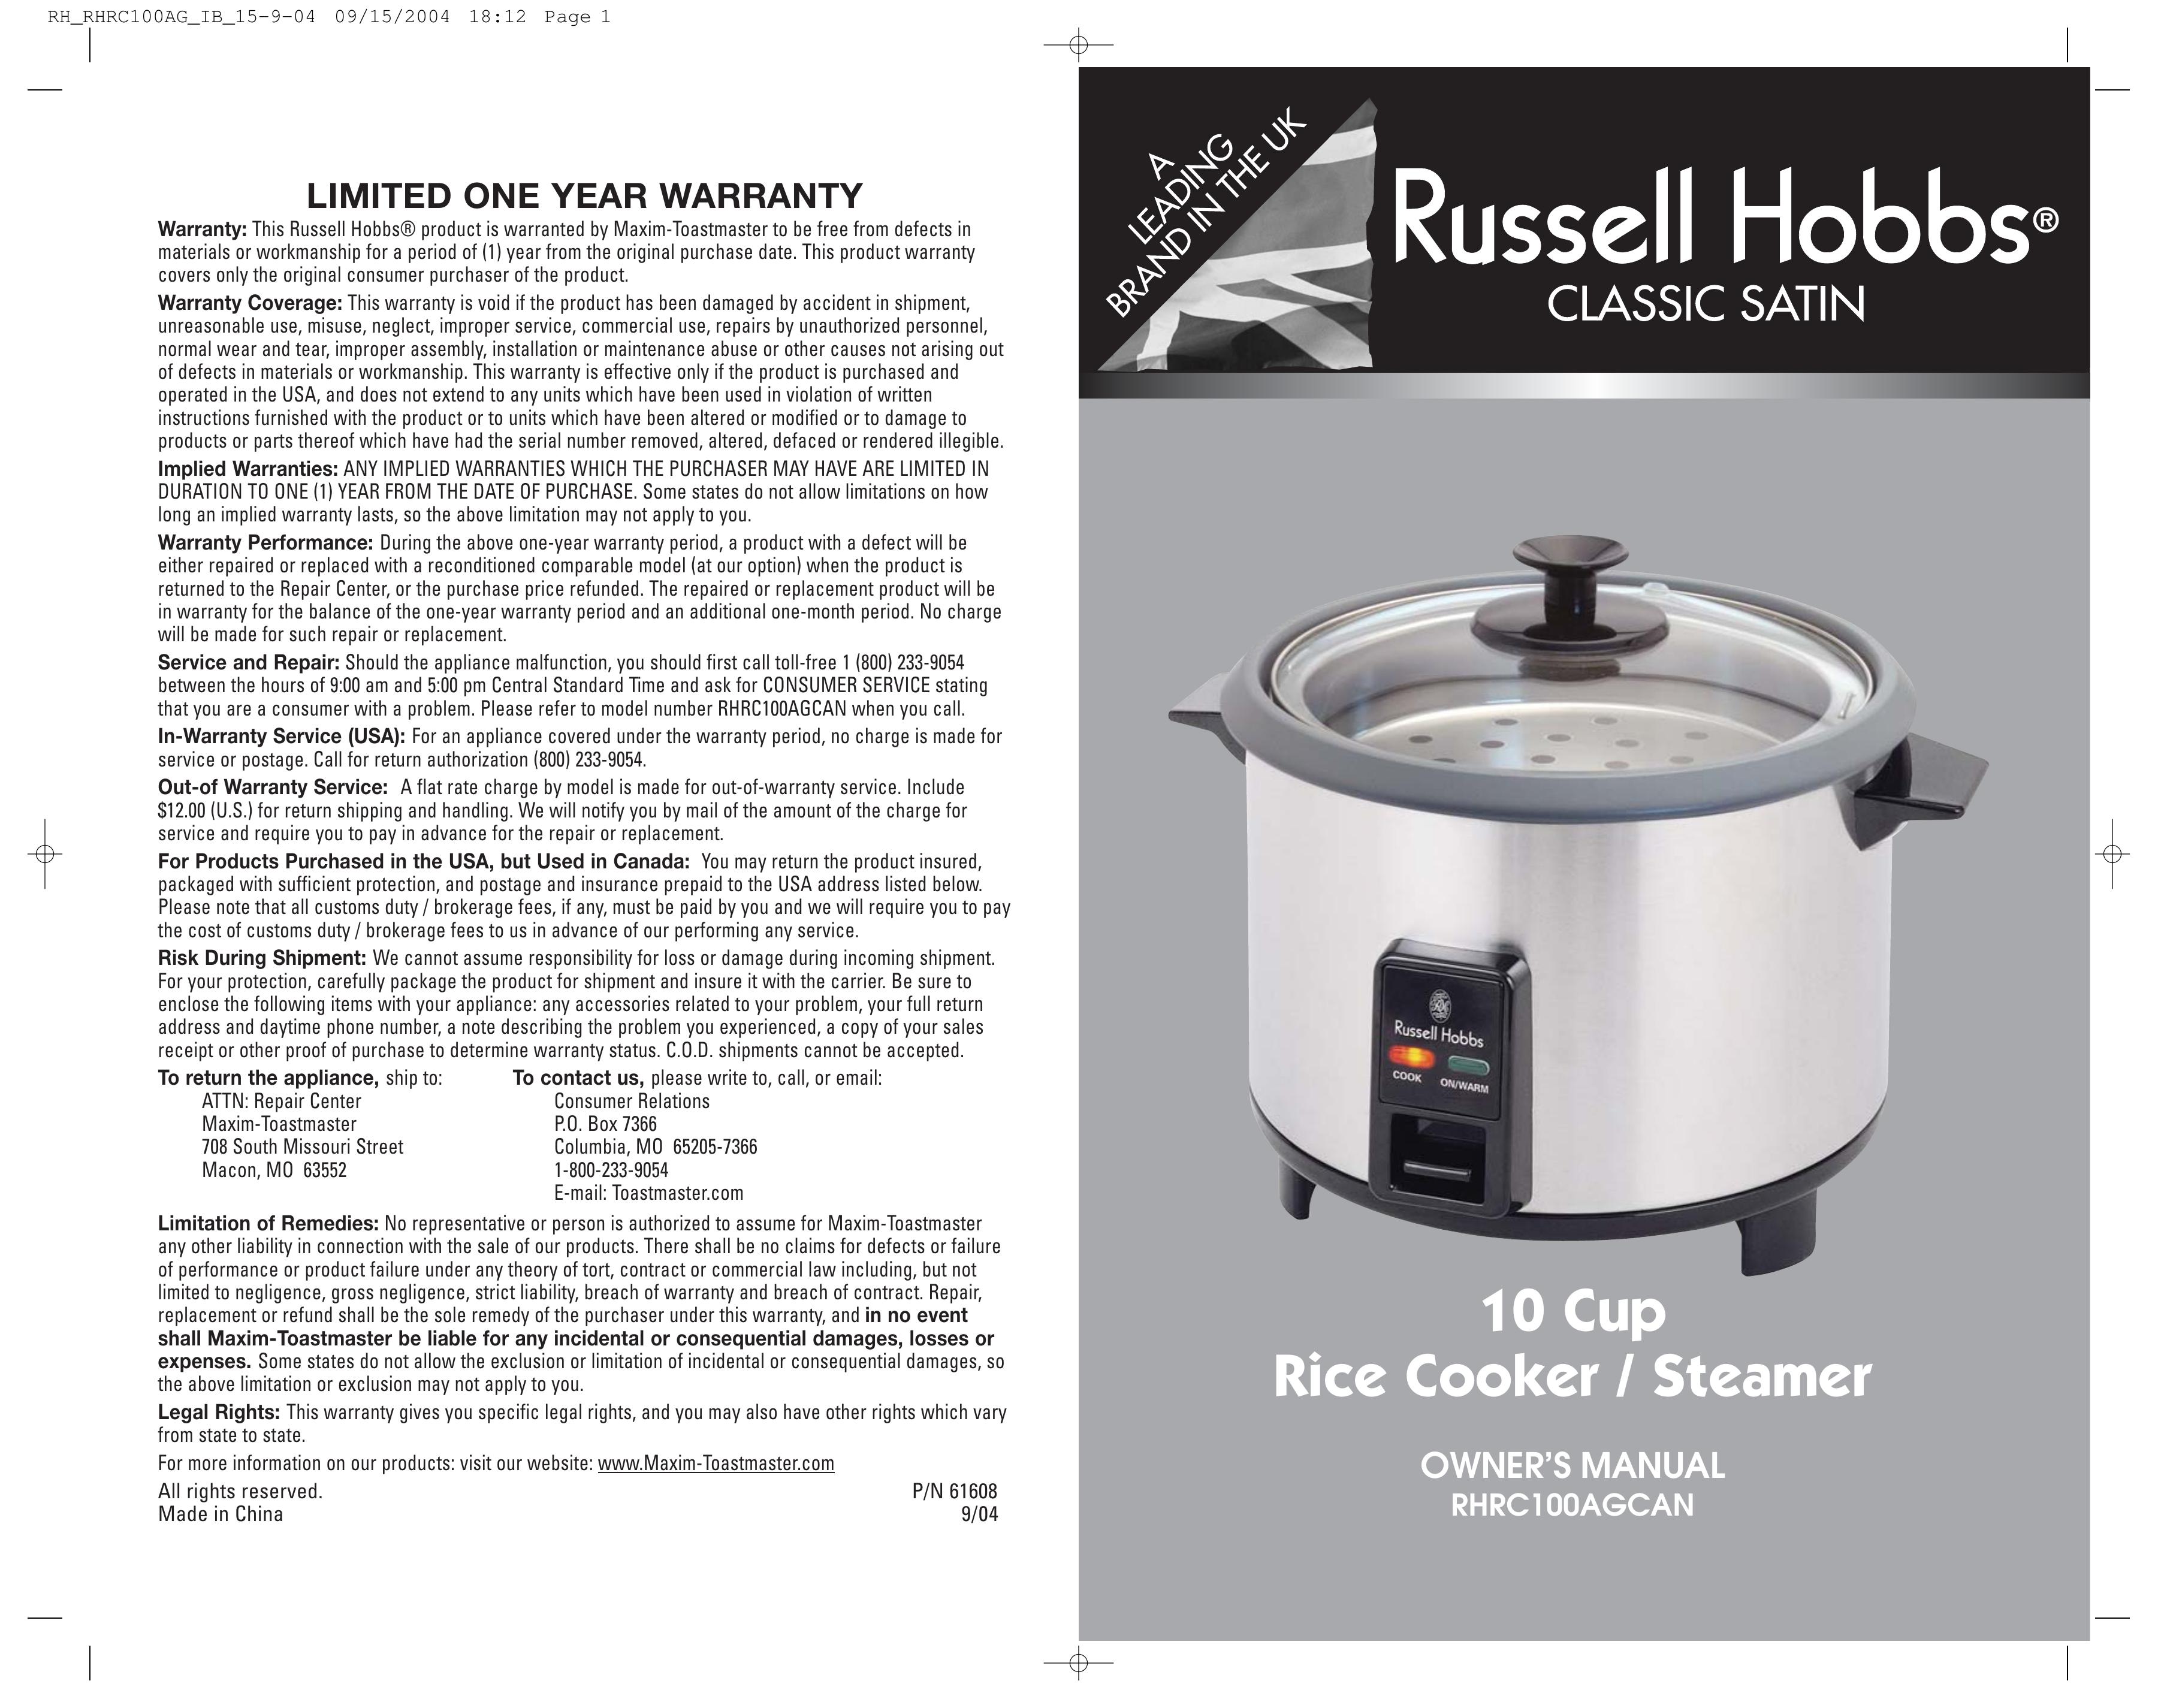 Toastmaster RHRC100AGCAN Rice Cooker User Manual